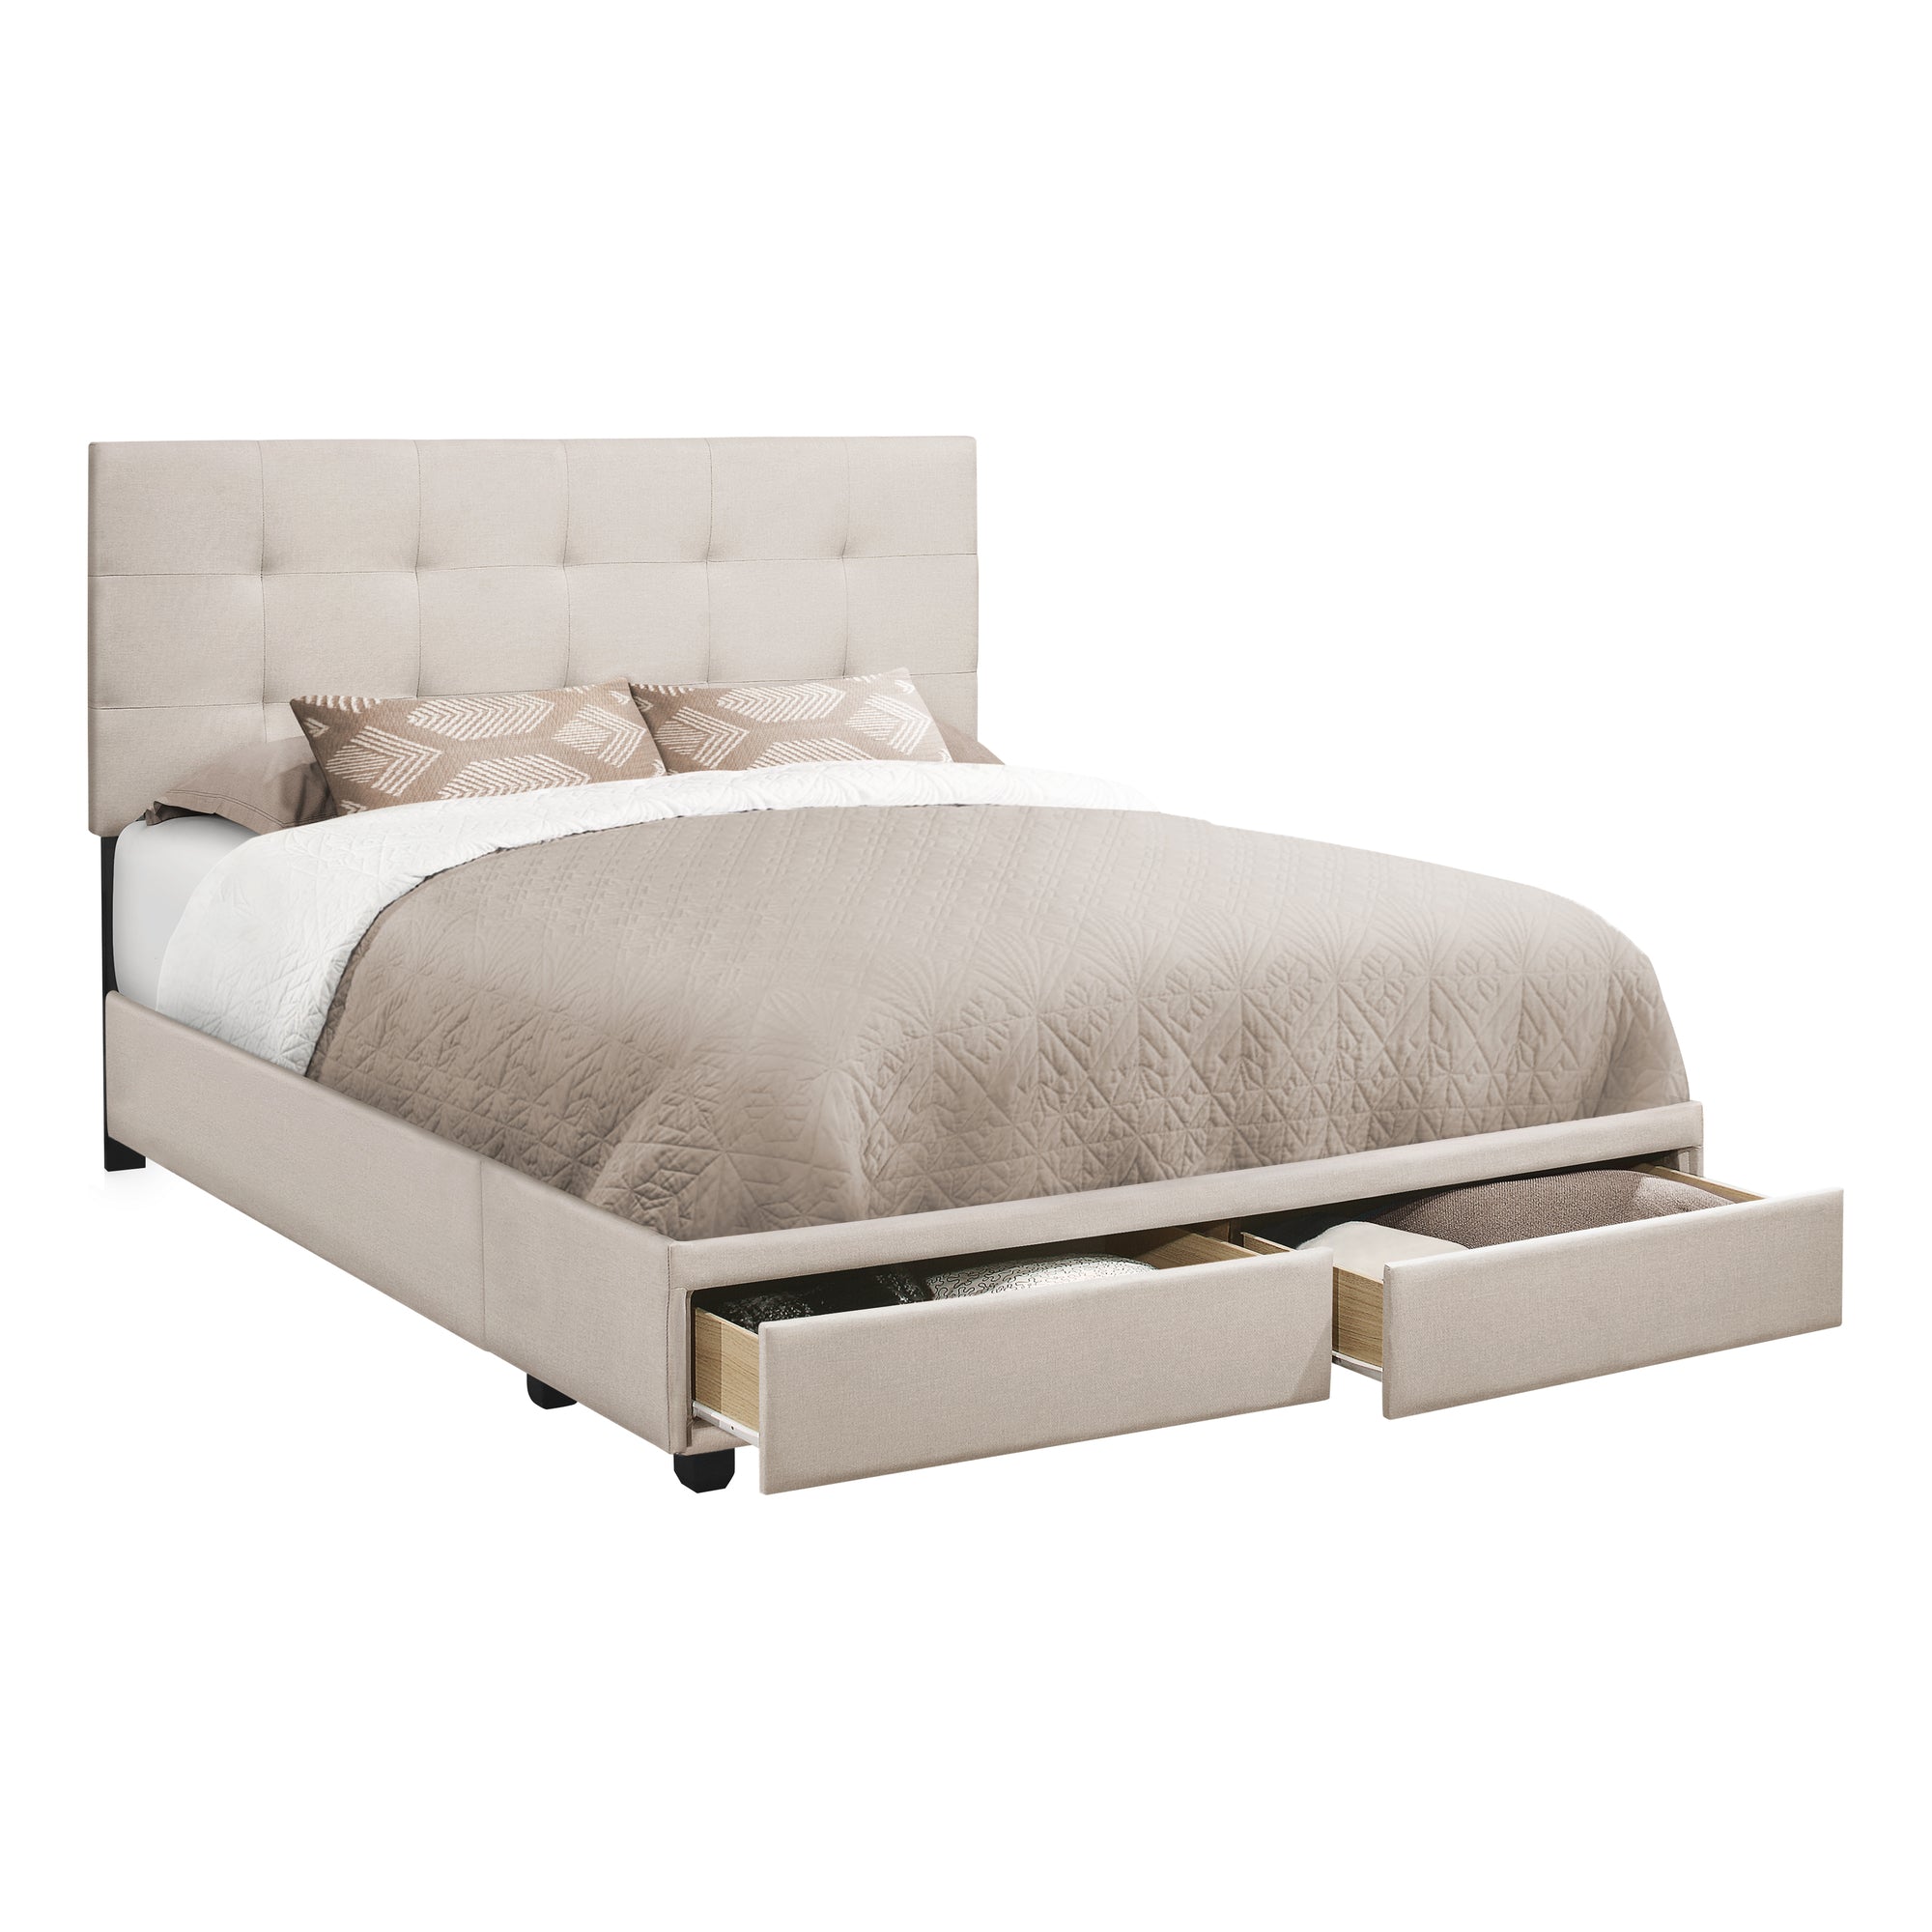 MN-606021Q    Bed, Frame, Platform, Bedroom, Queen Size, Upholstered, Linen Look Fabric, Wood Legs, Beige, Black, Contemporary, Modern